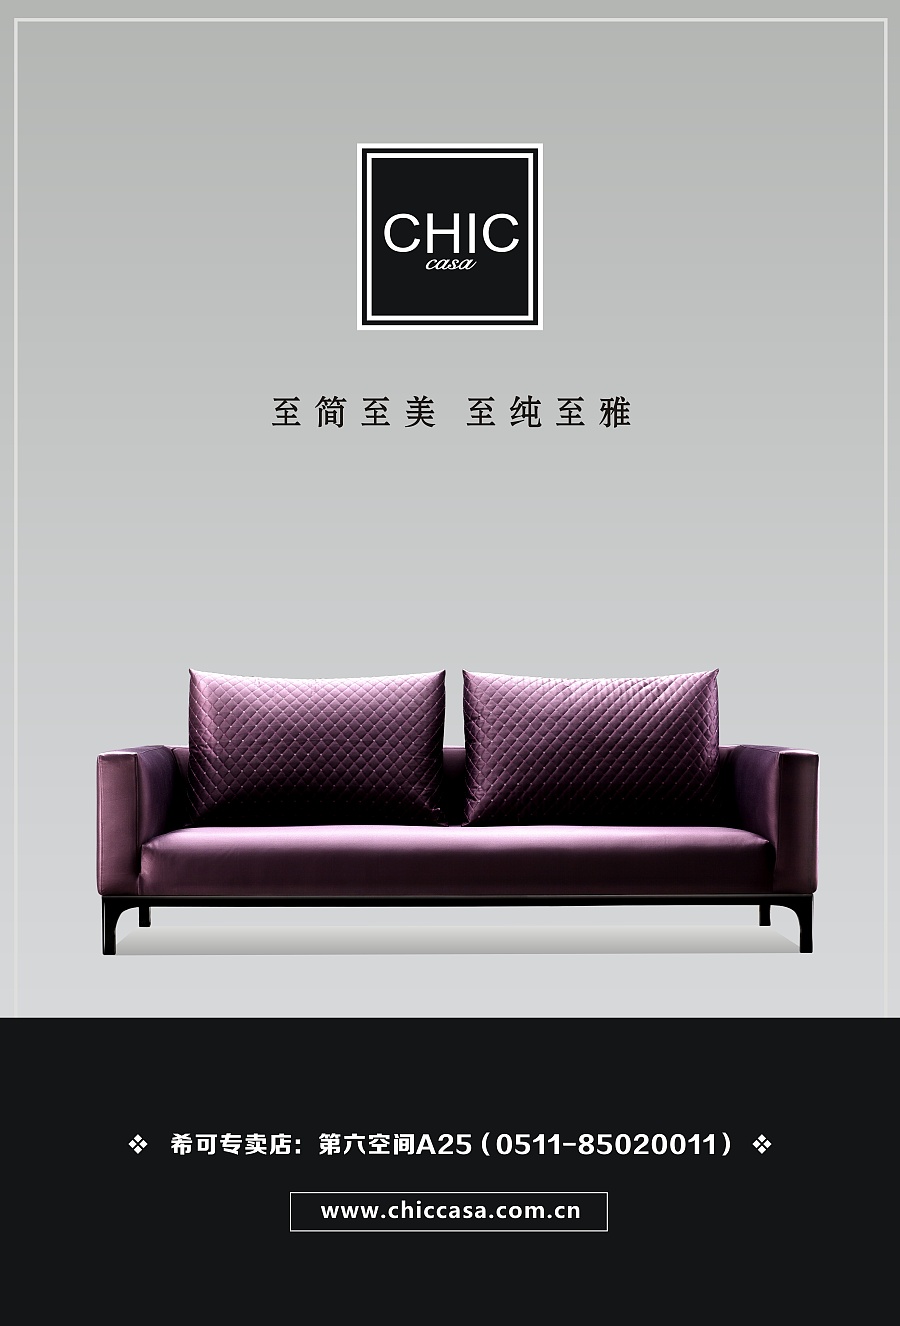 【chic casa】外墙广告|海报|平面|you5989577